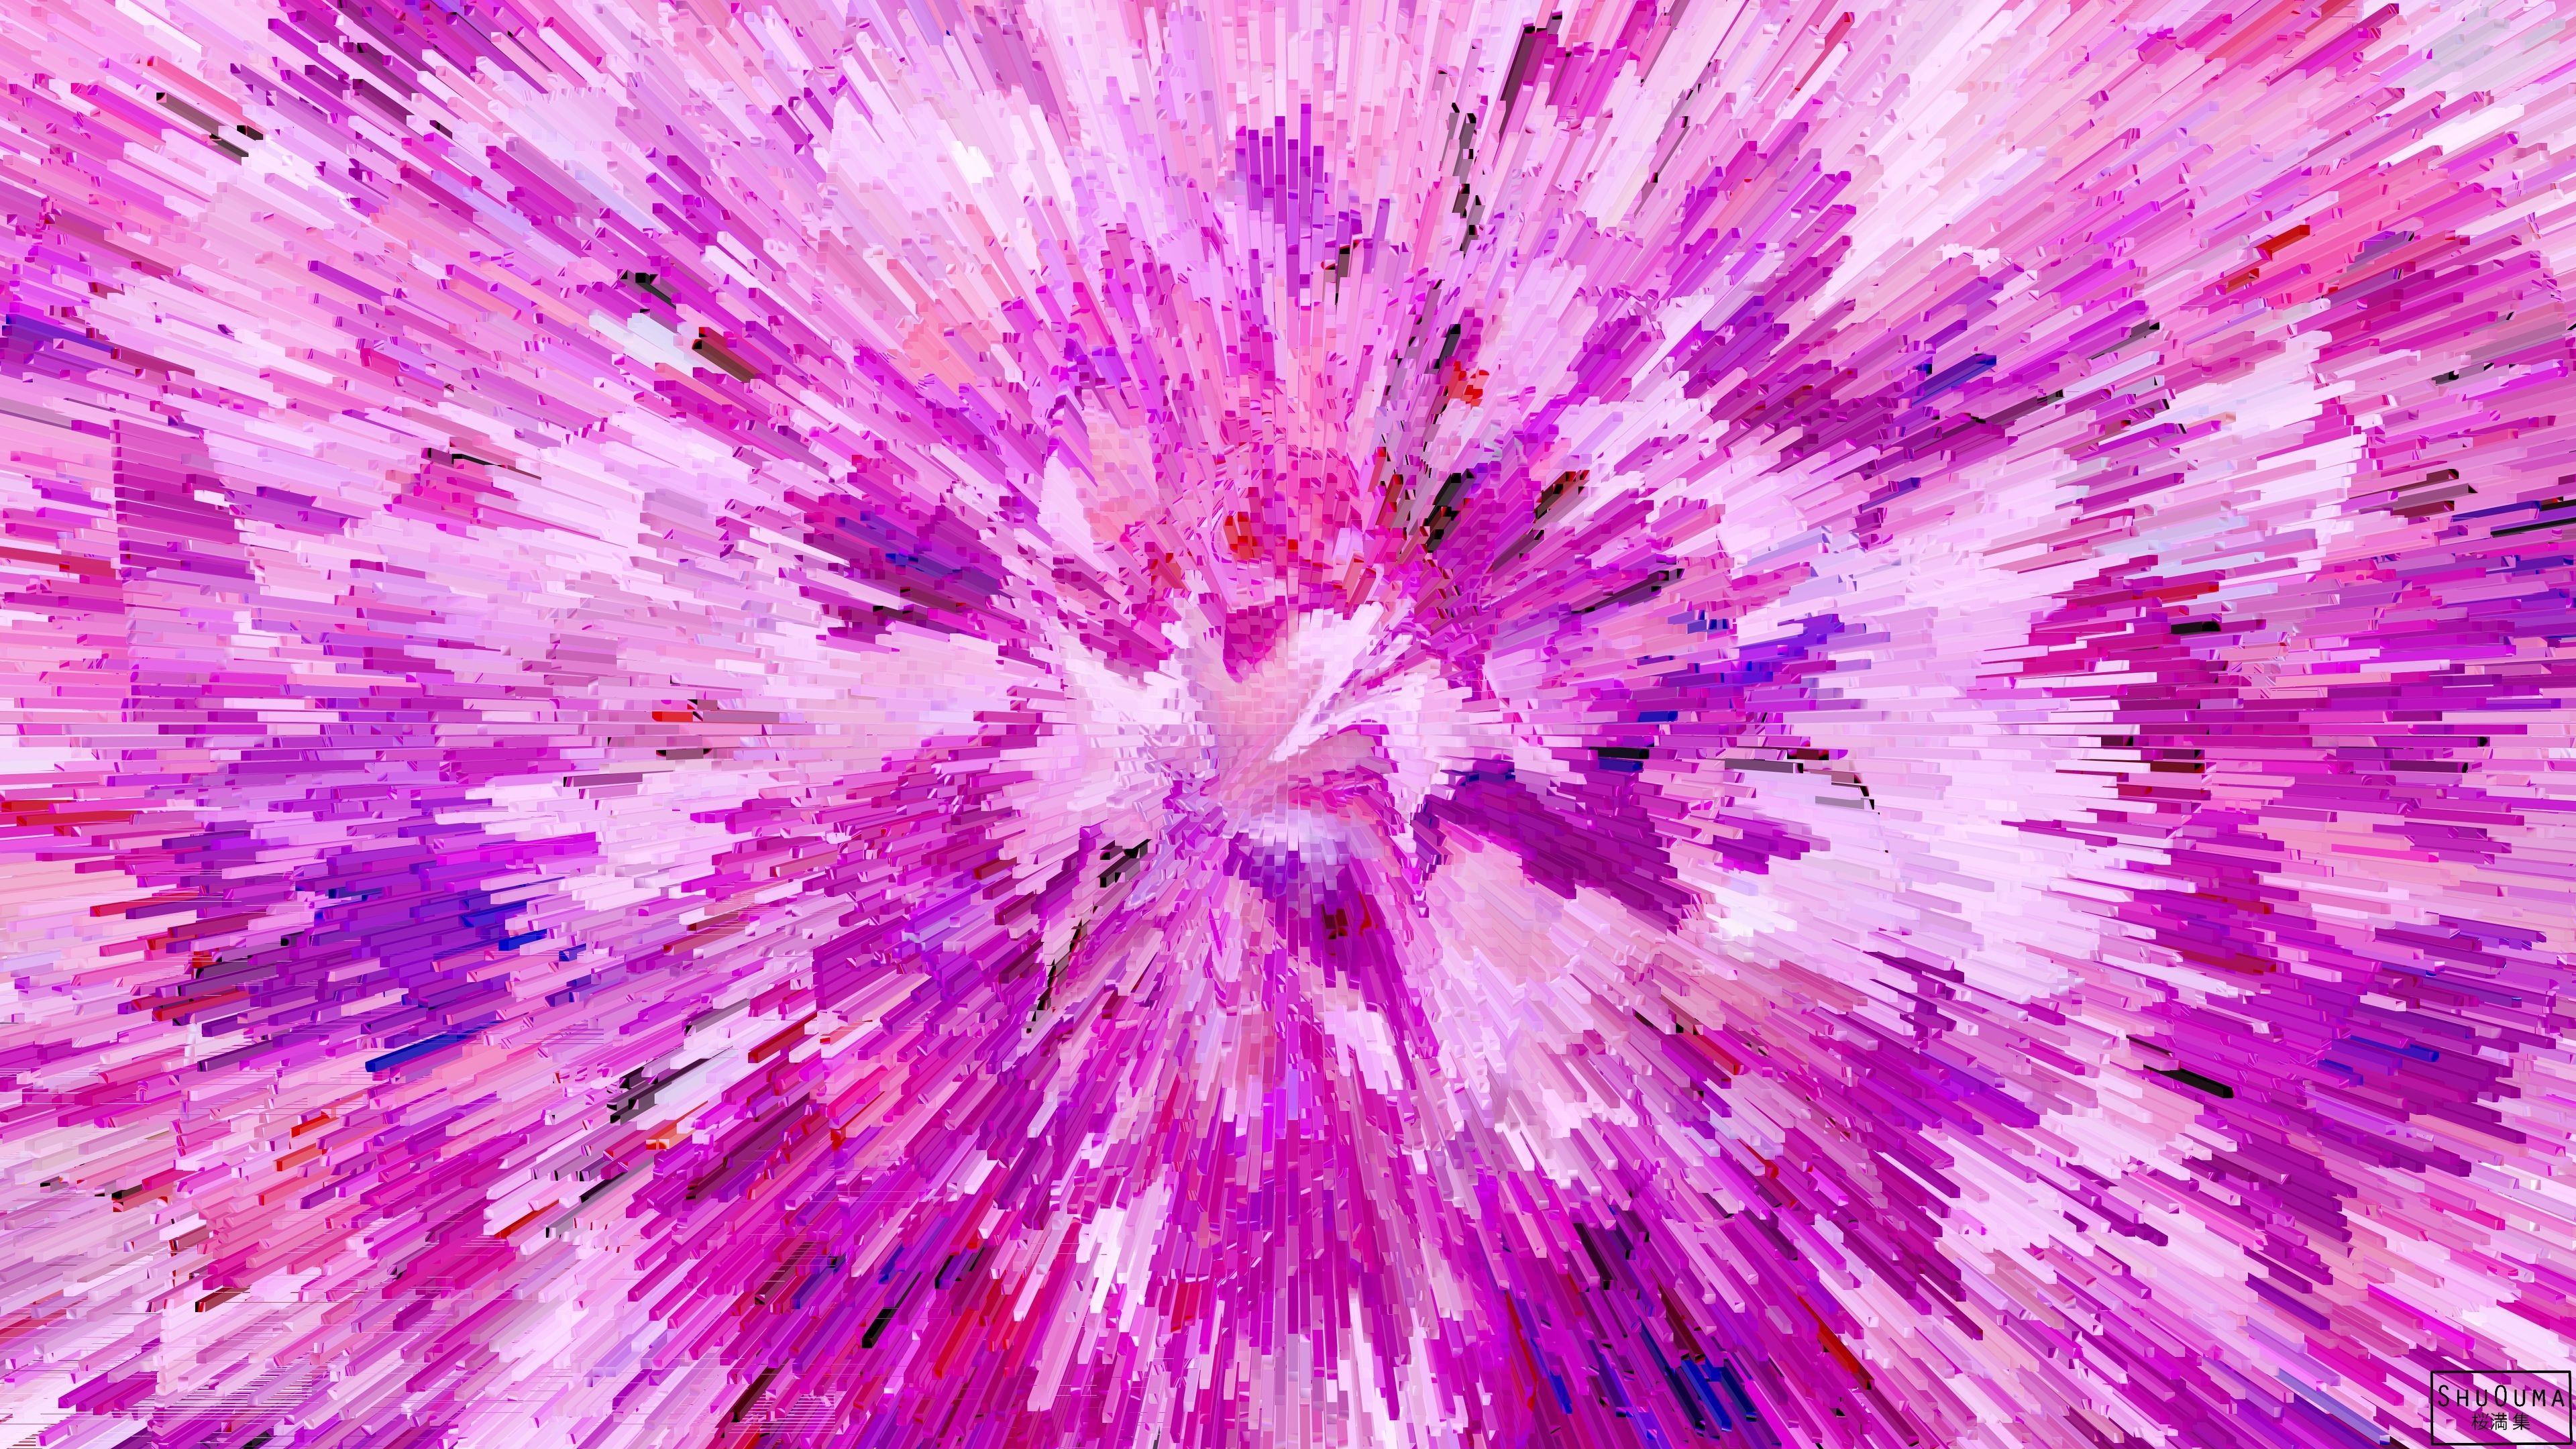 Abstract Pink 4k Pink Wallpaper, Hd Wallpaper, Abstract Wallpaper, 4k Wallpaper. Abstract Wallpaper, Pink Wallpaper, Pink Wallpaper Background